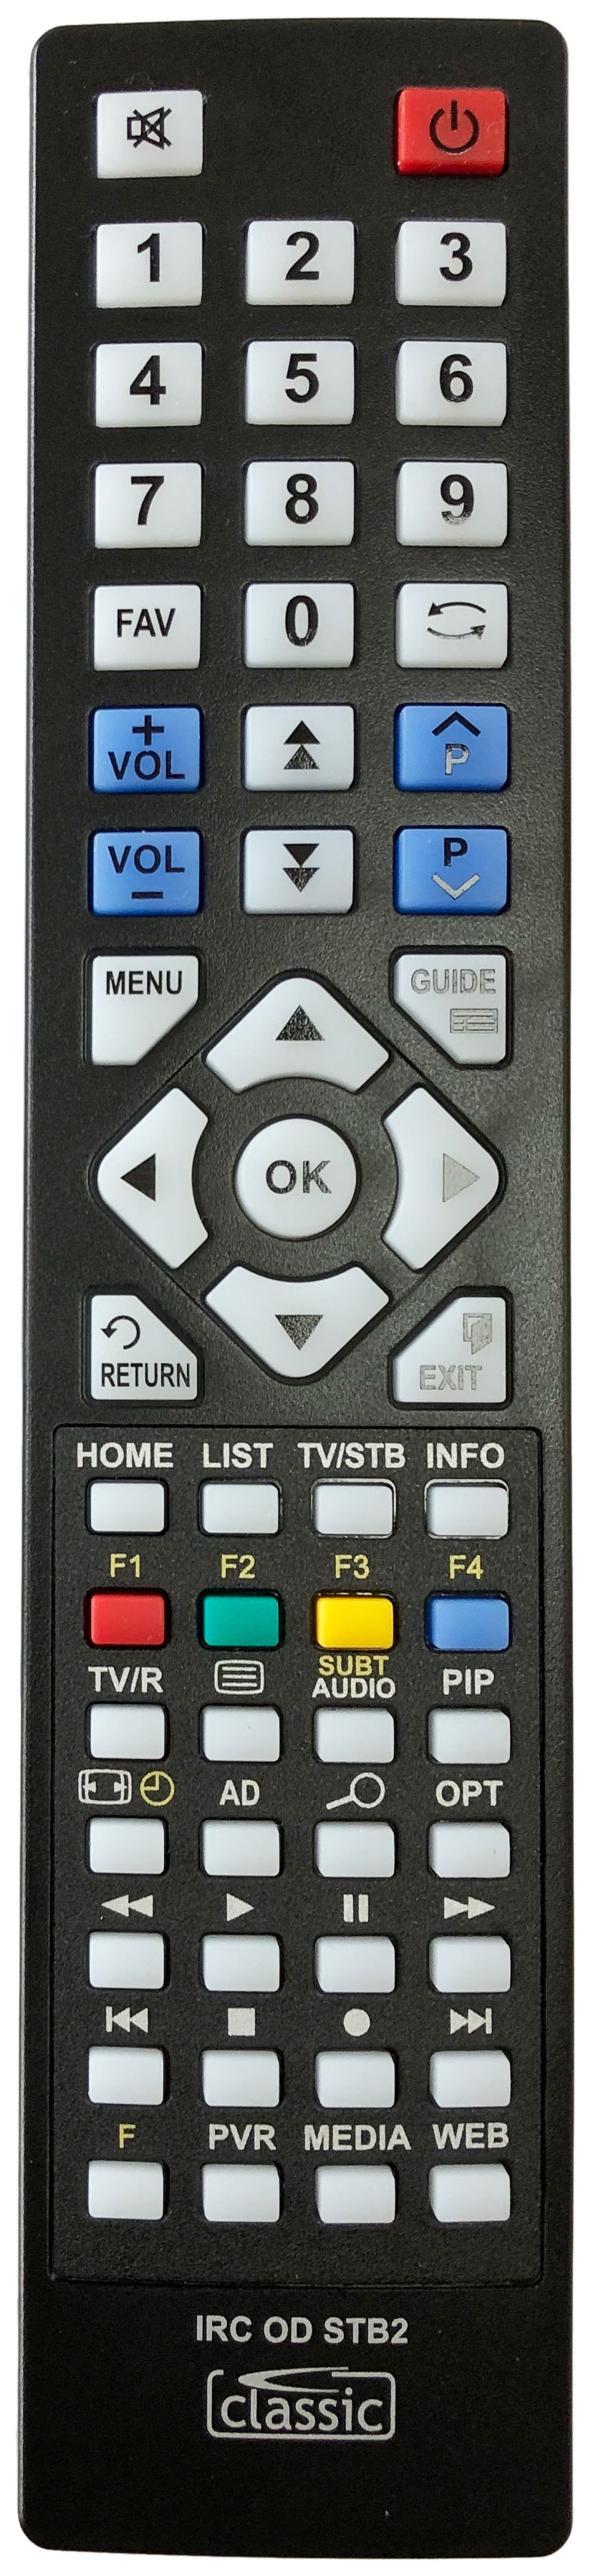 Finlux 30070063 Remote Control Alternative